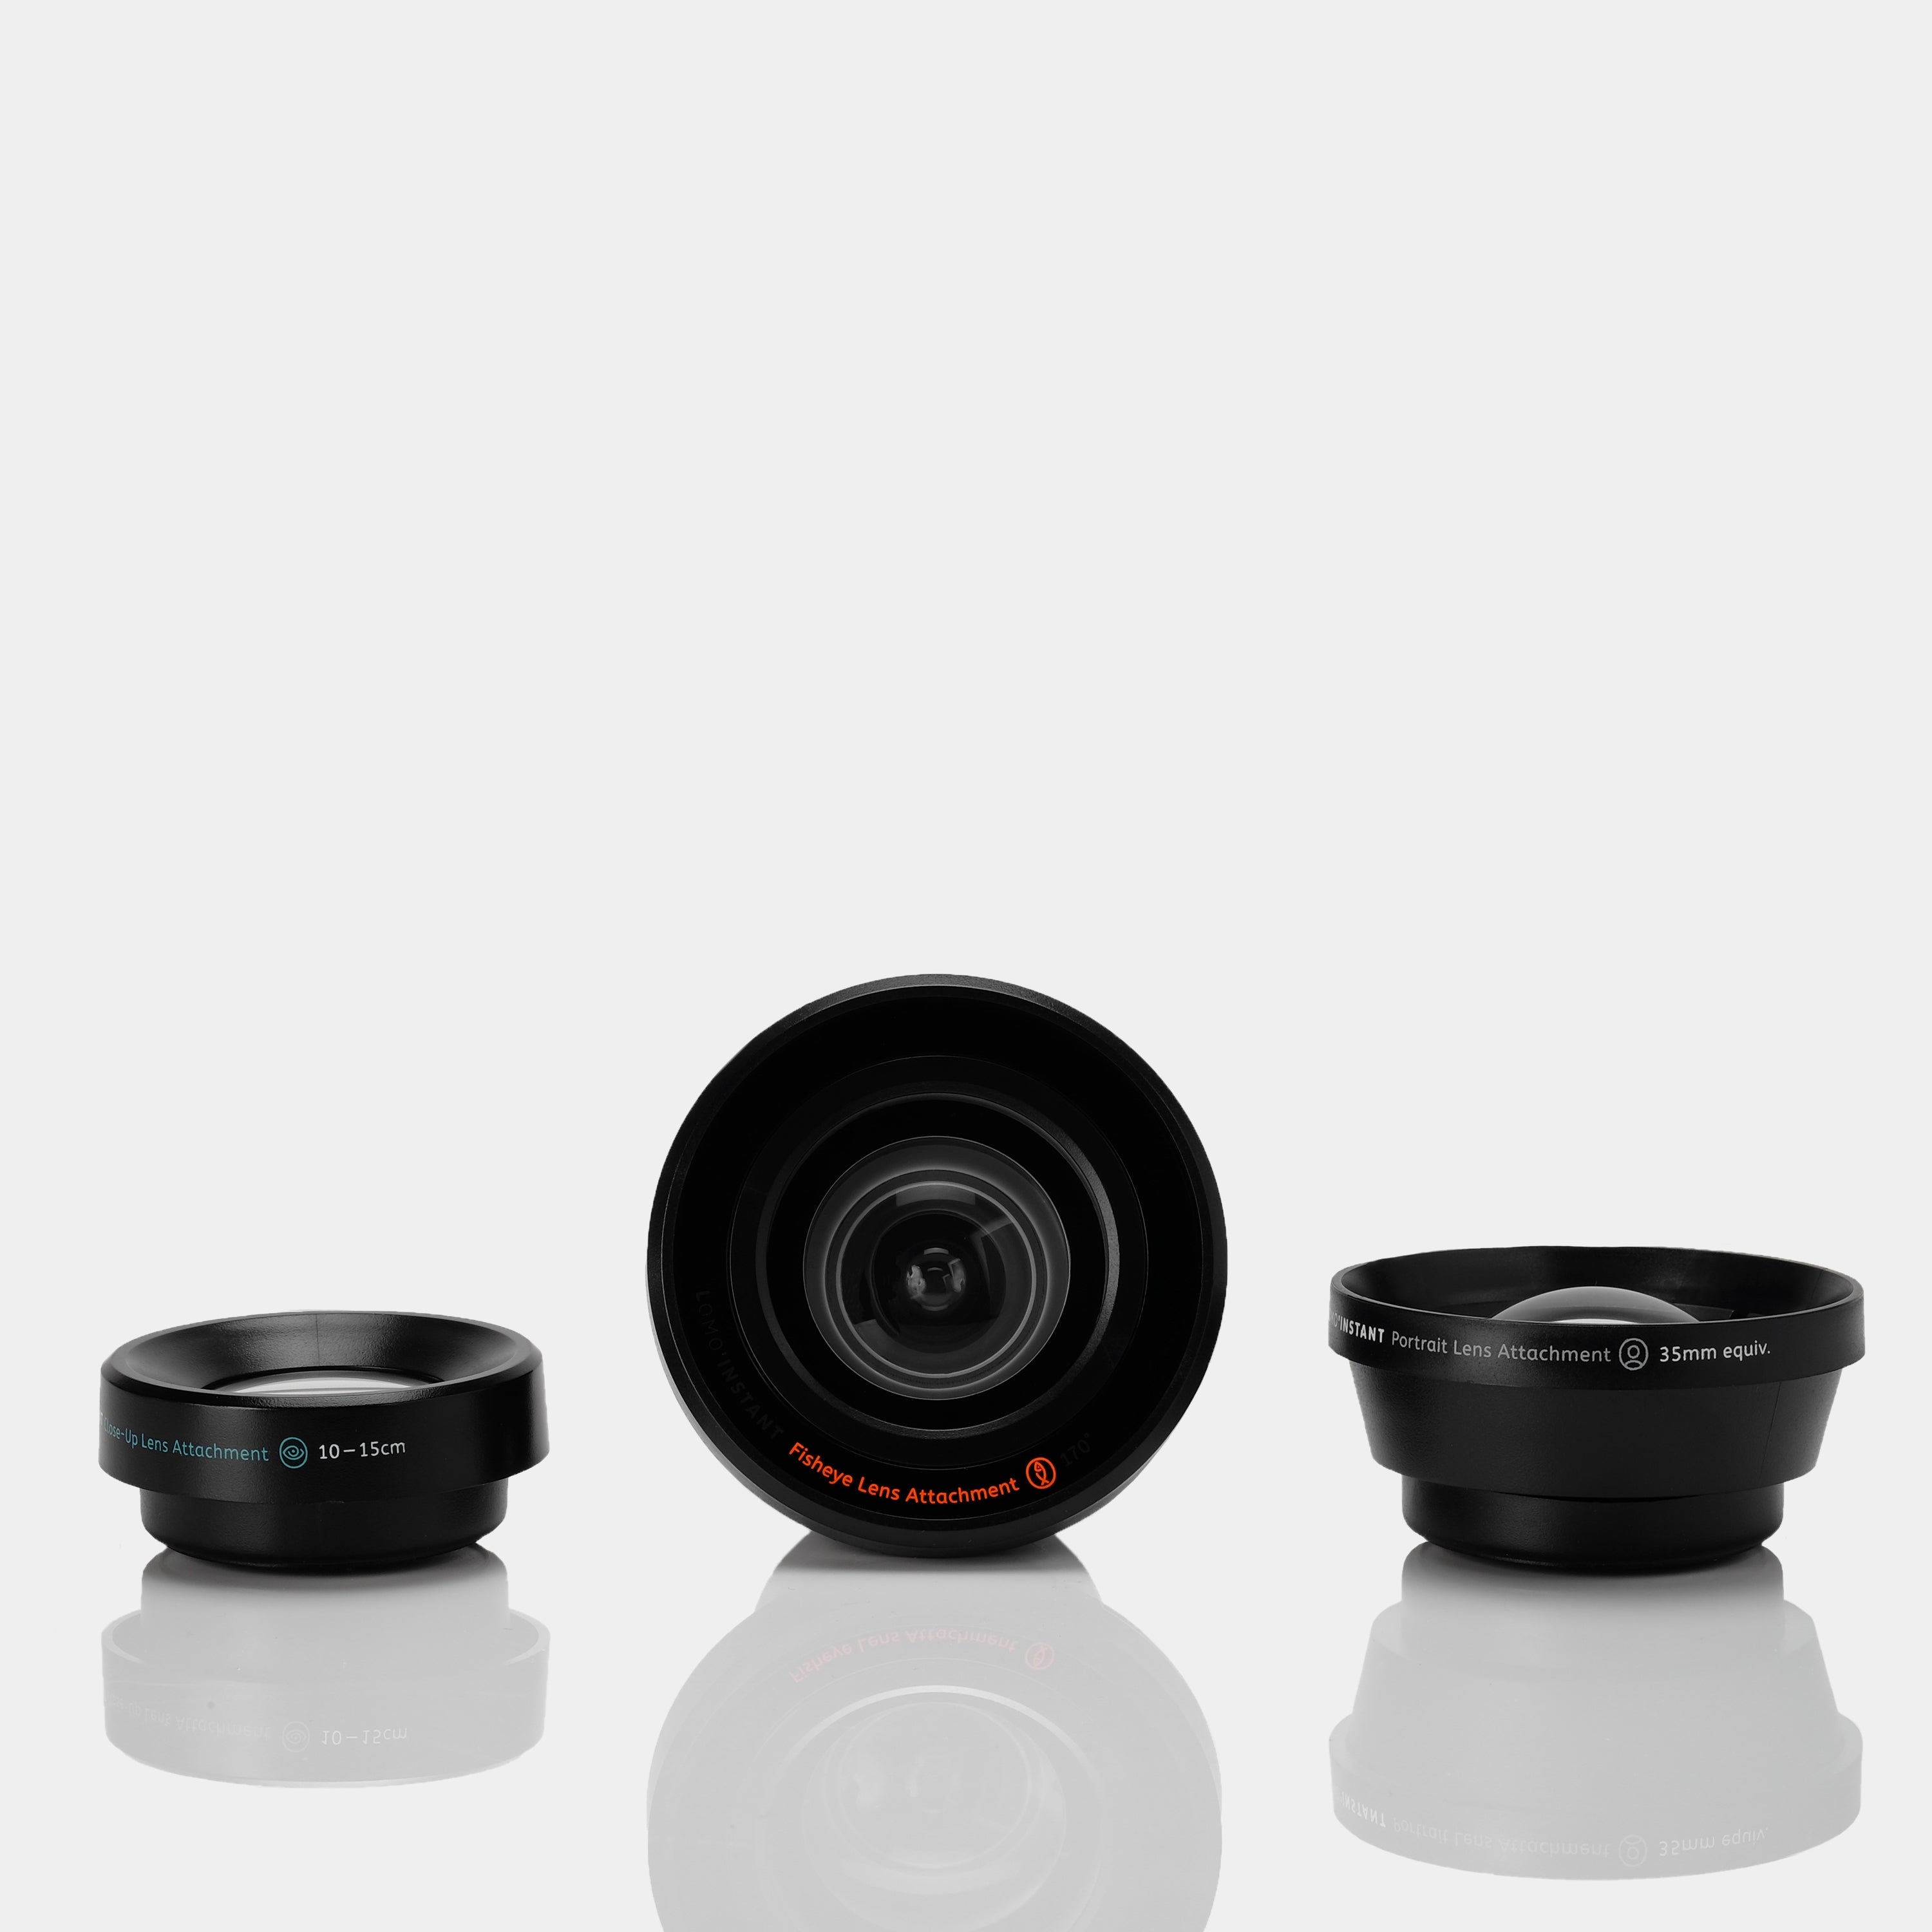 Lomo'Instant Instax Mini (Sanremo Edition) Instant Film Camera And Lenses